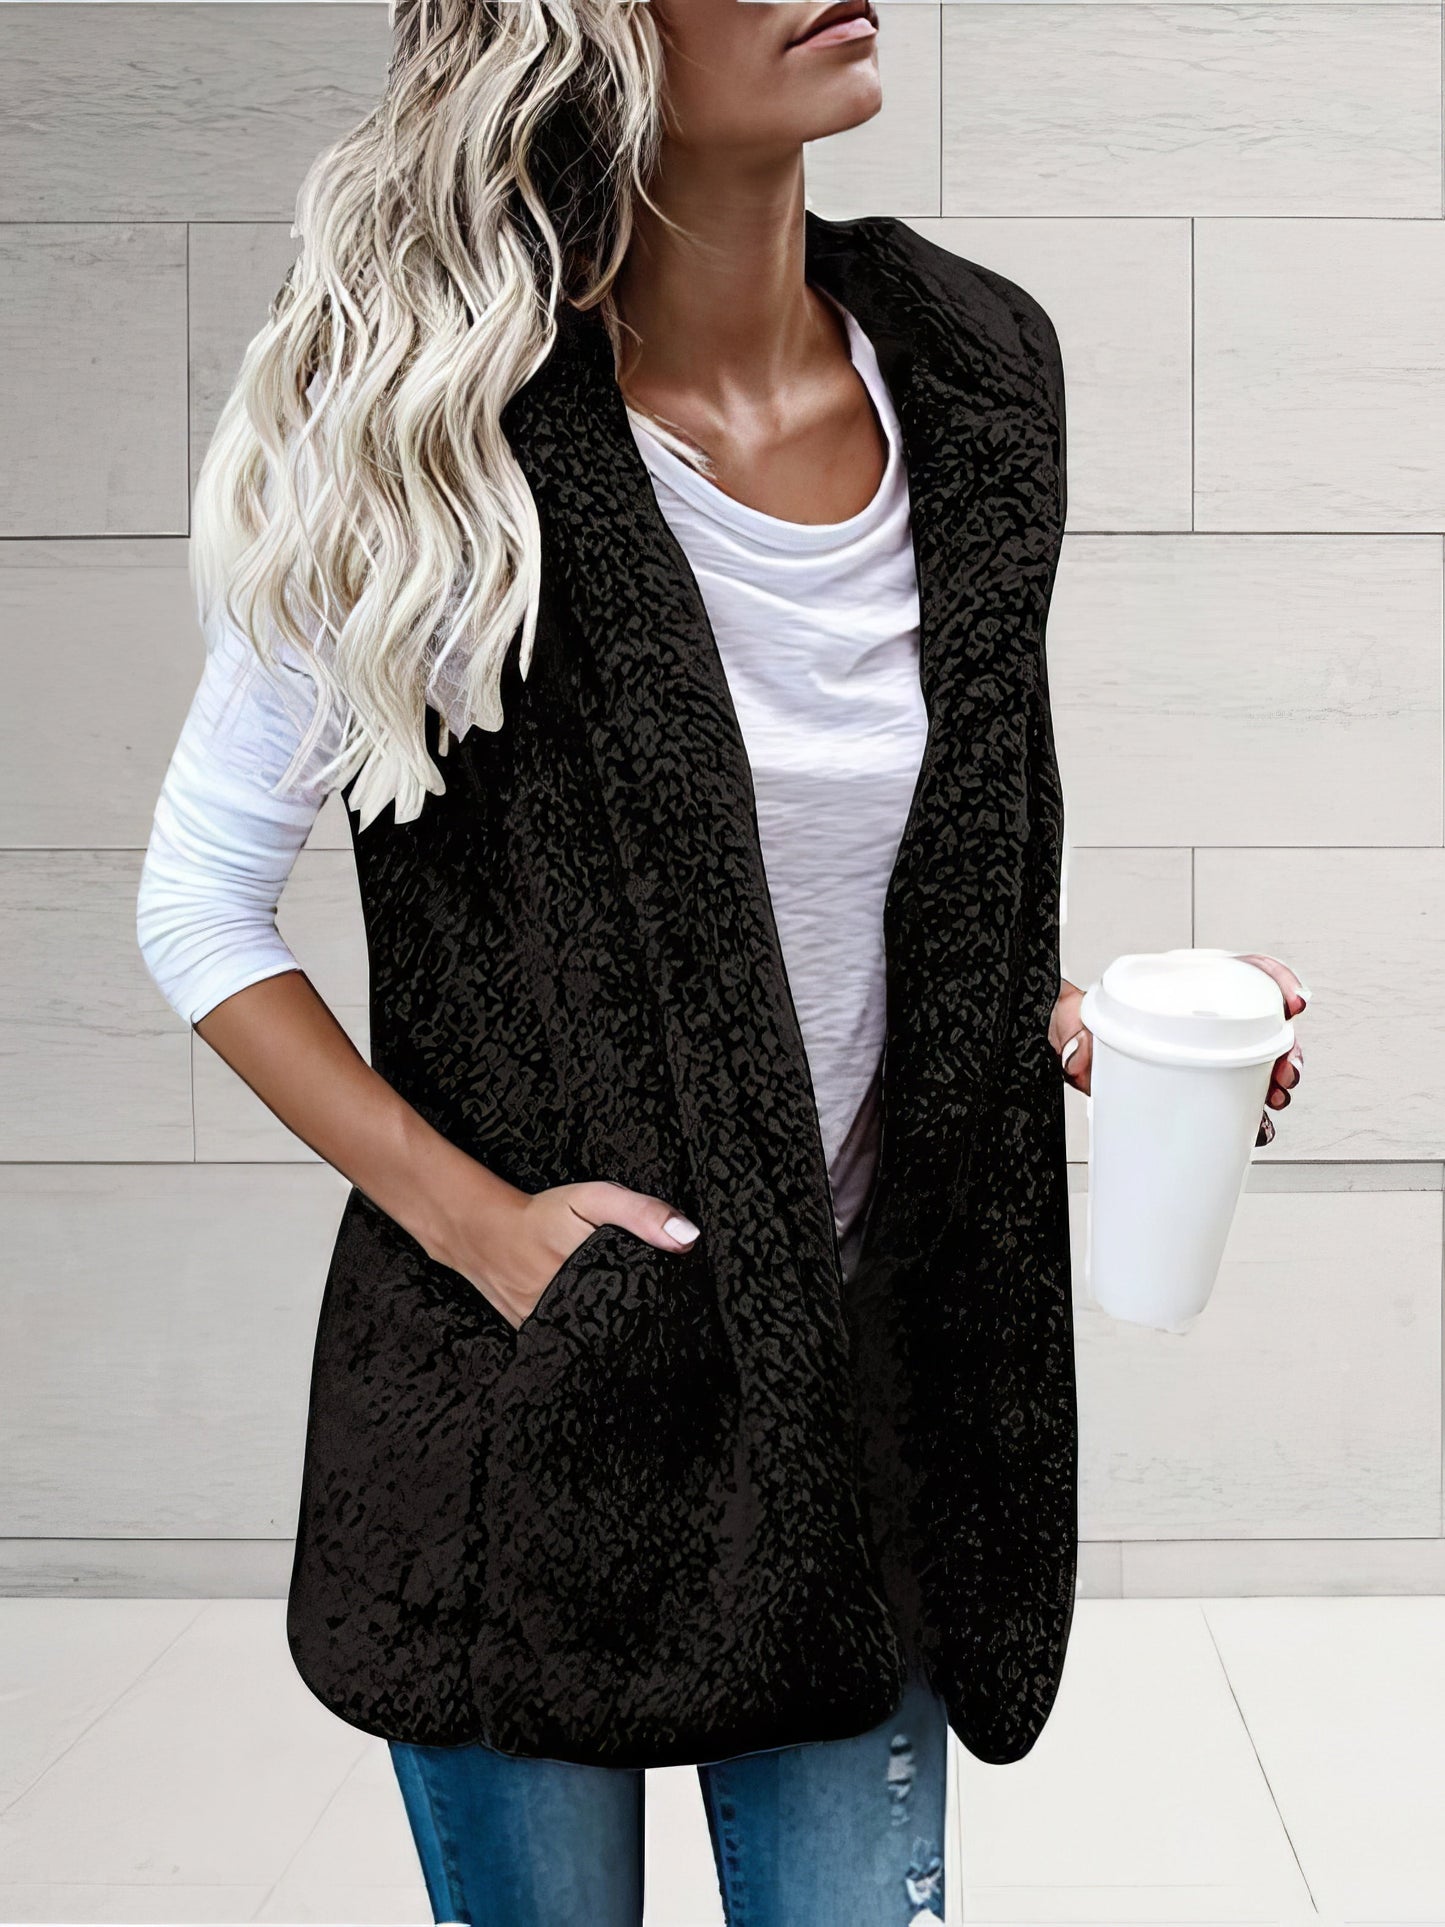 Coats - Solid Sleeveless Hooded Pocket Fur Vest - MsDressly